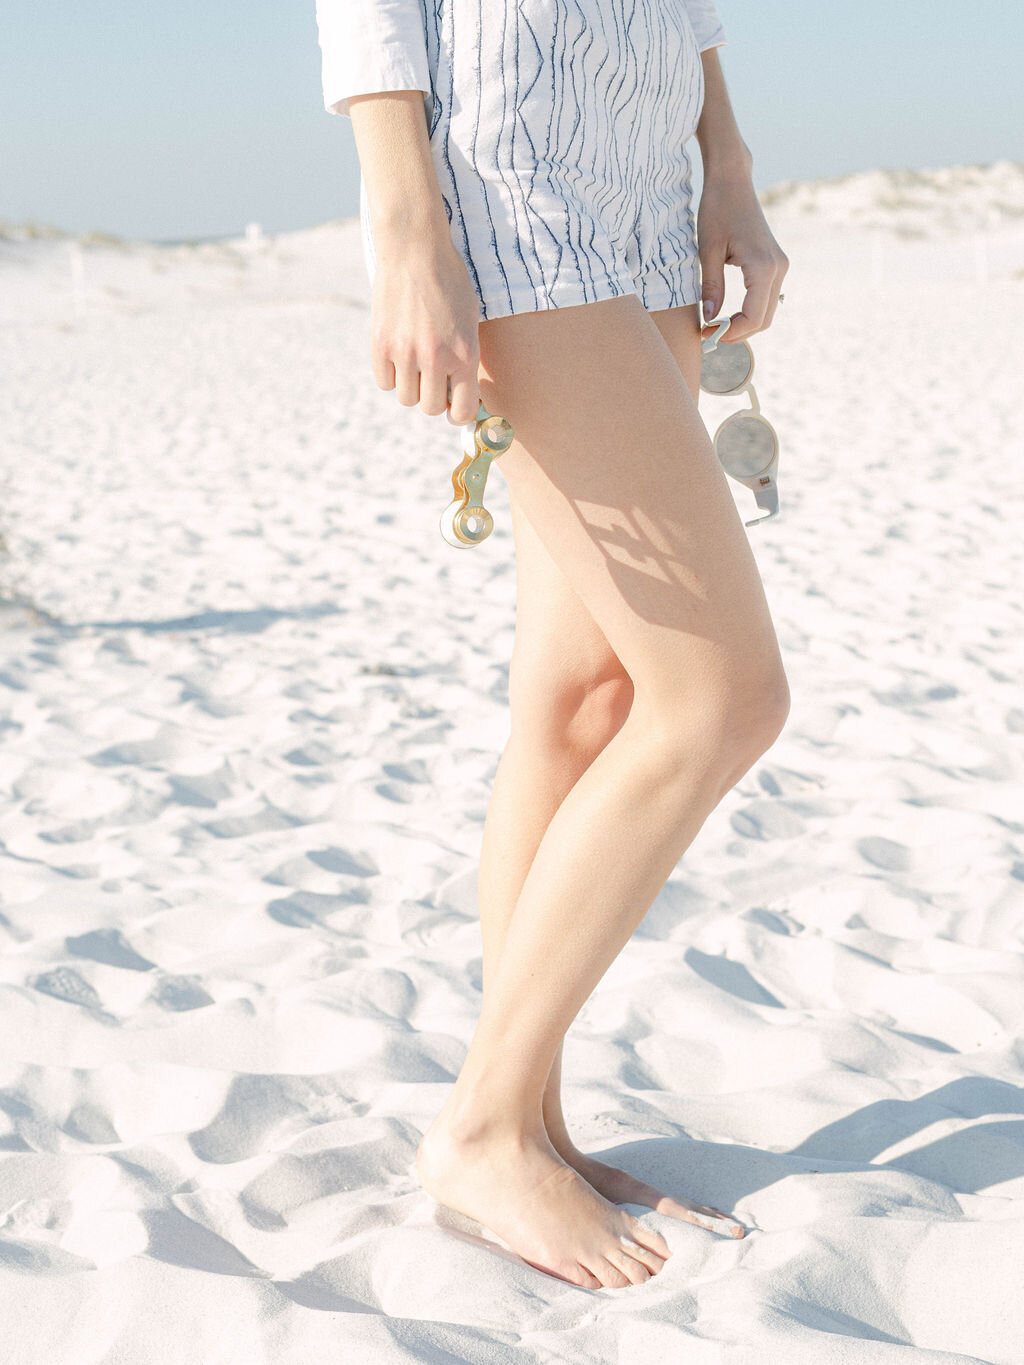 woman on Kaiya beach resort, florida wearing white crop top and shorts by vintage Betsy Johnson